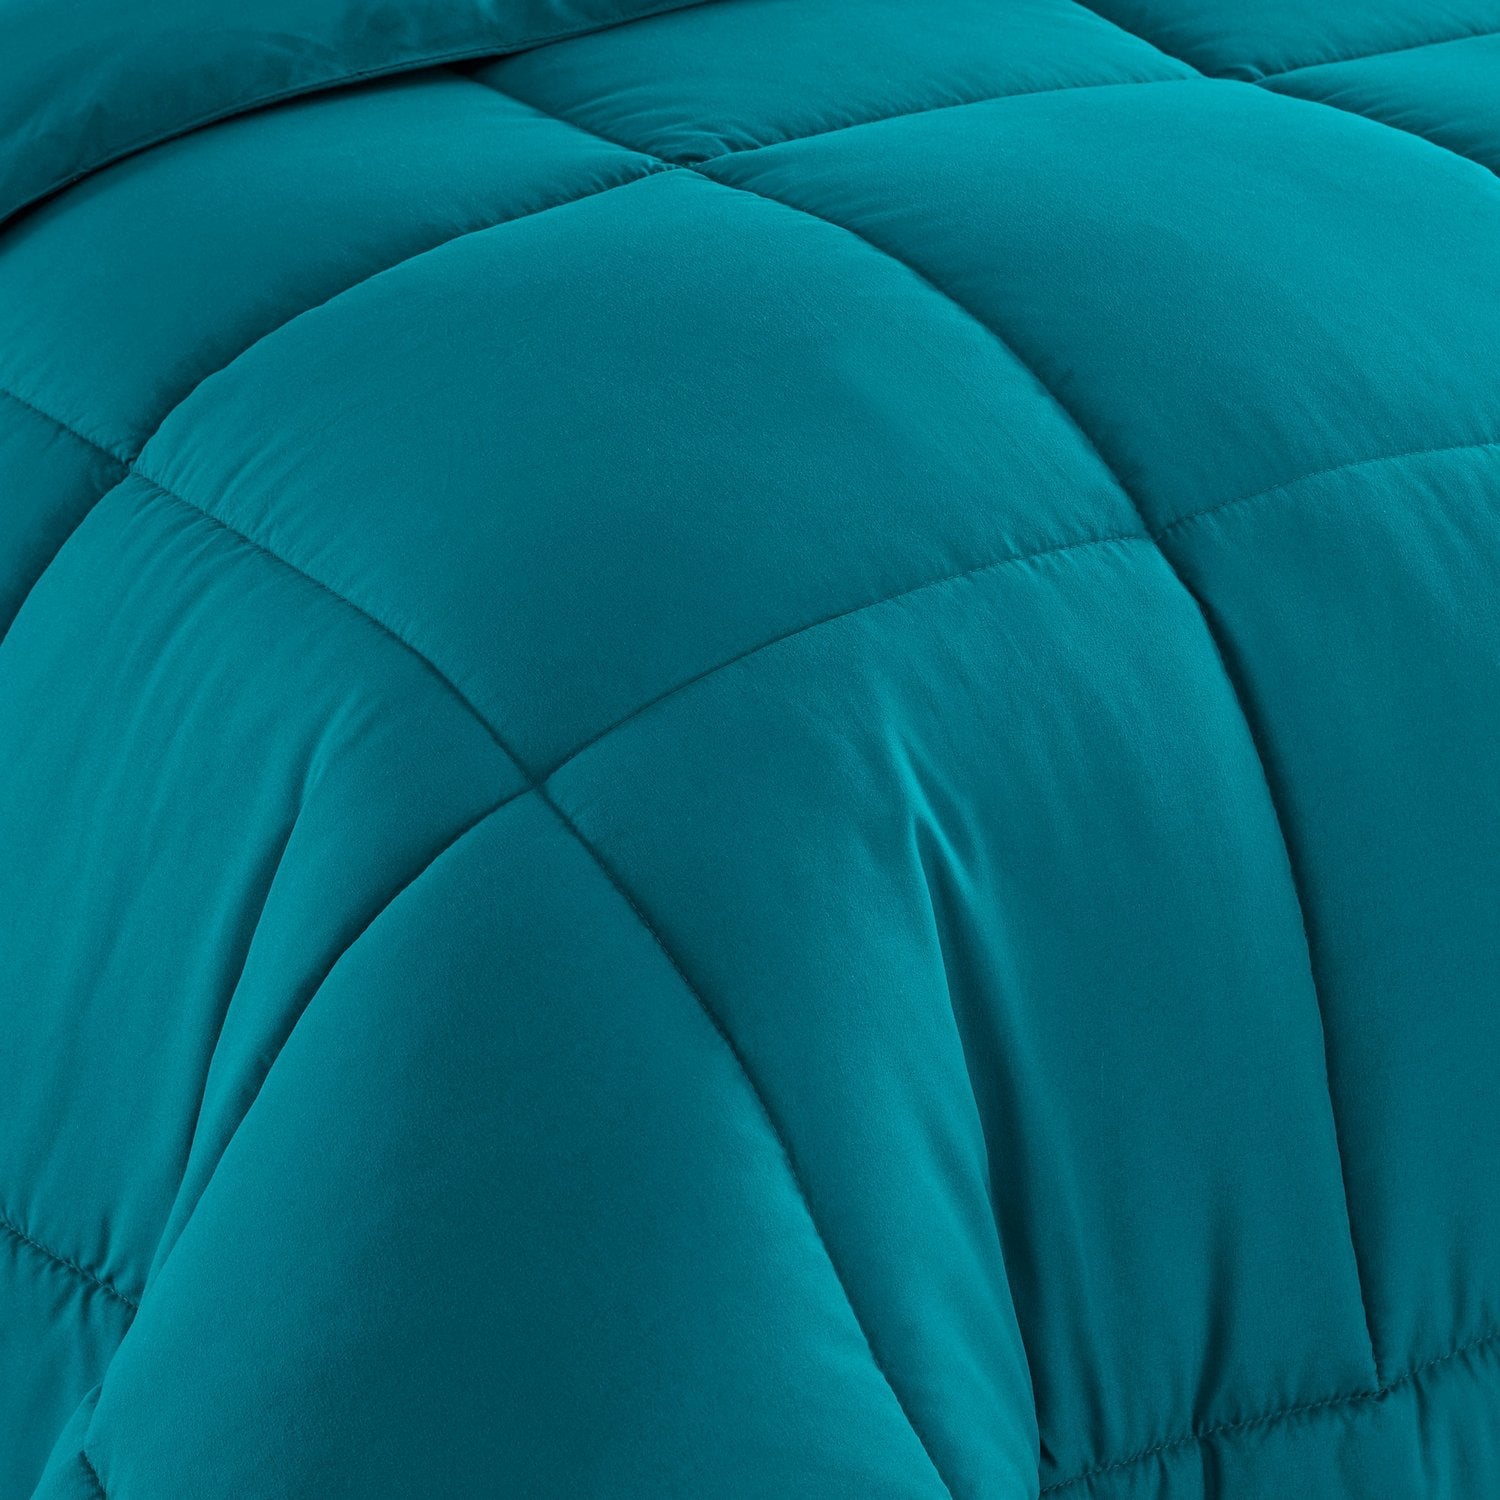 Down Alternative Comforter Teal - Comforter Detail